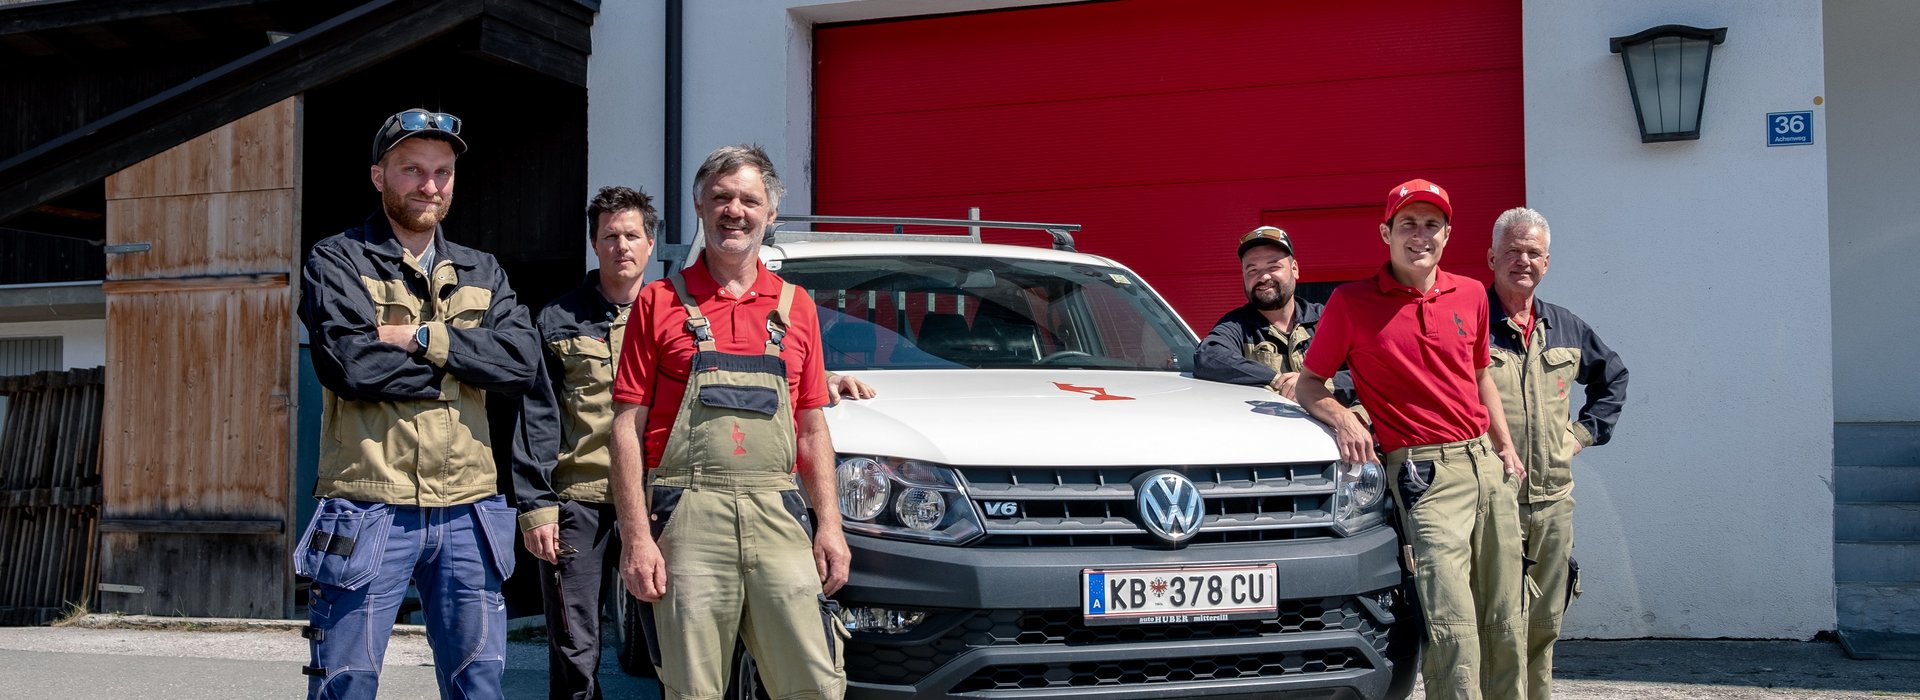 Team des Bauhofes von Kitzbühel Tourismus 